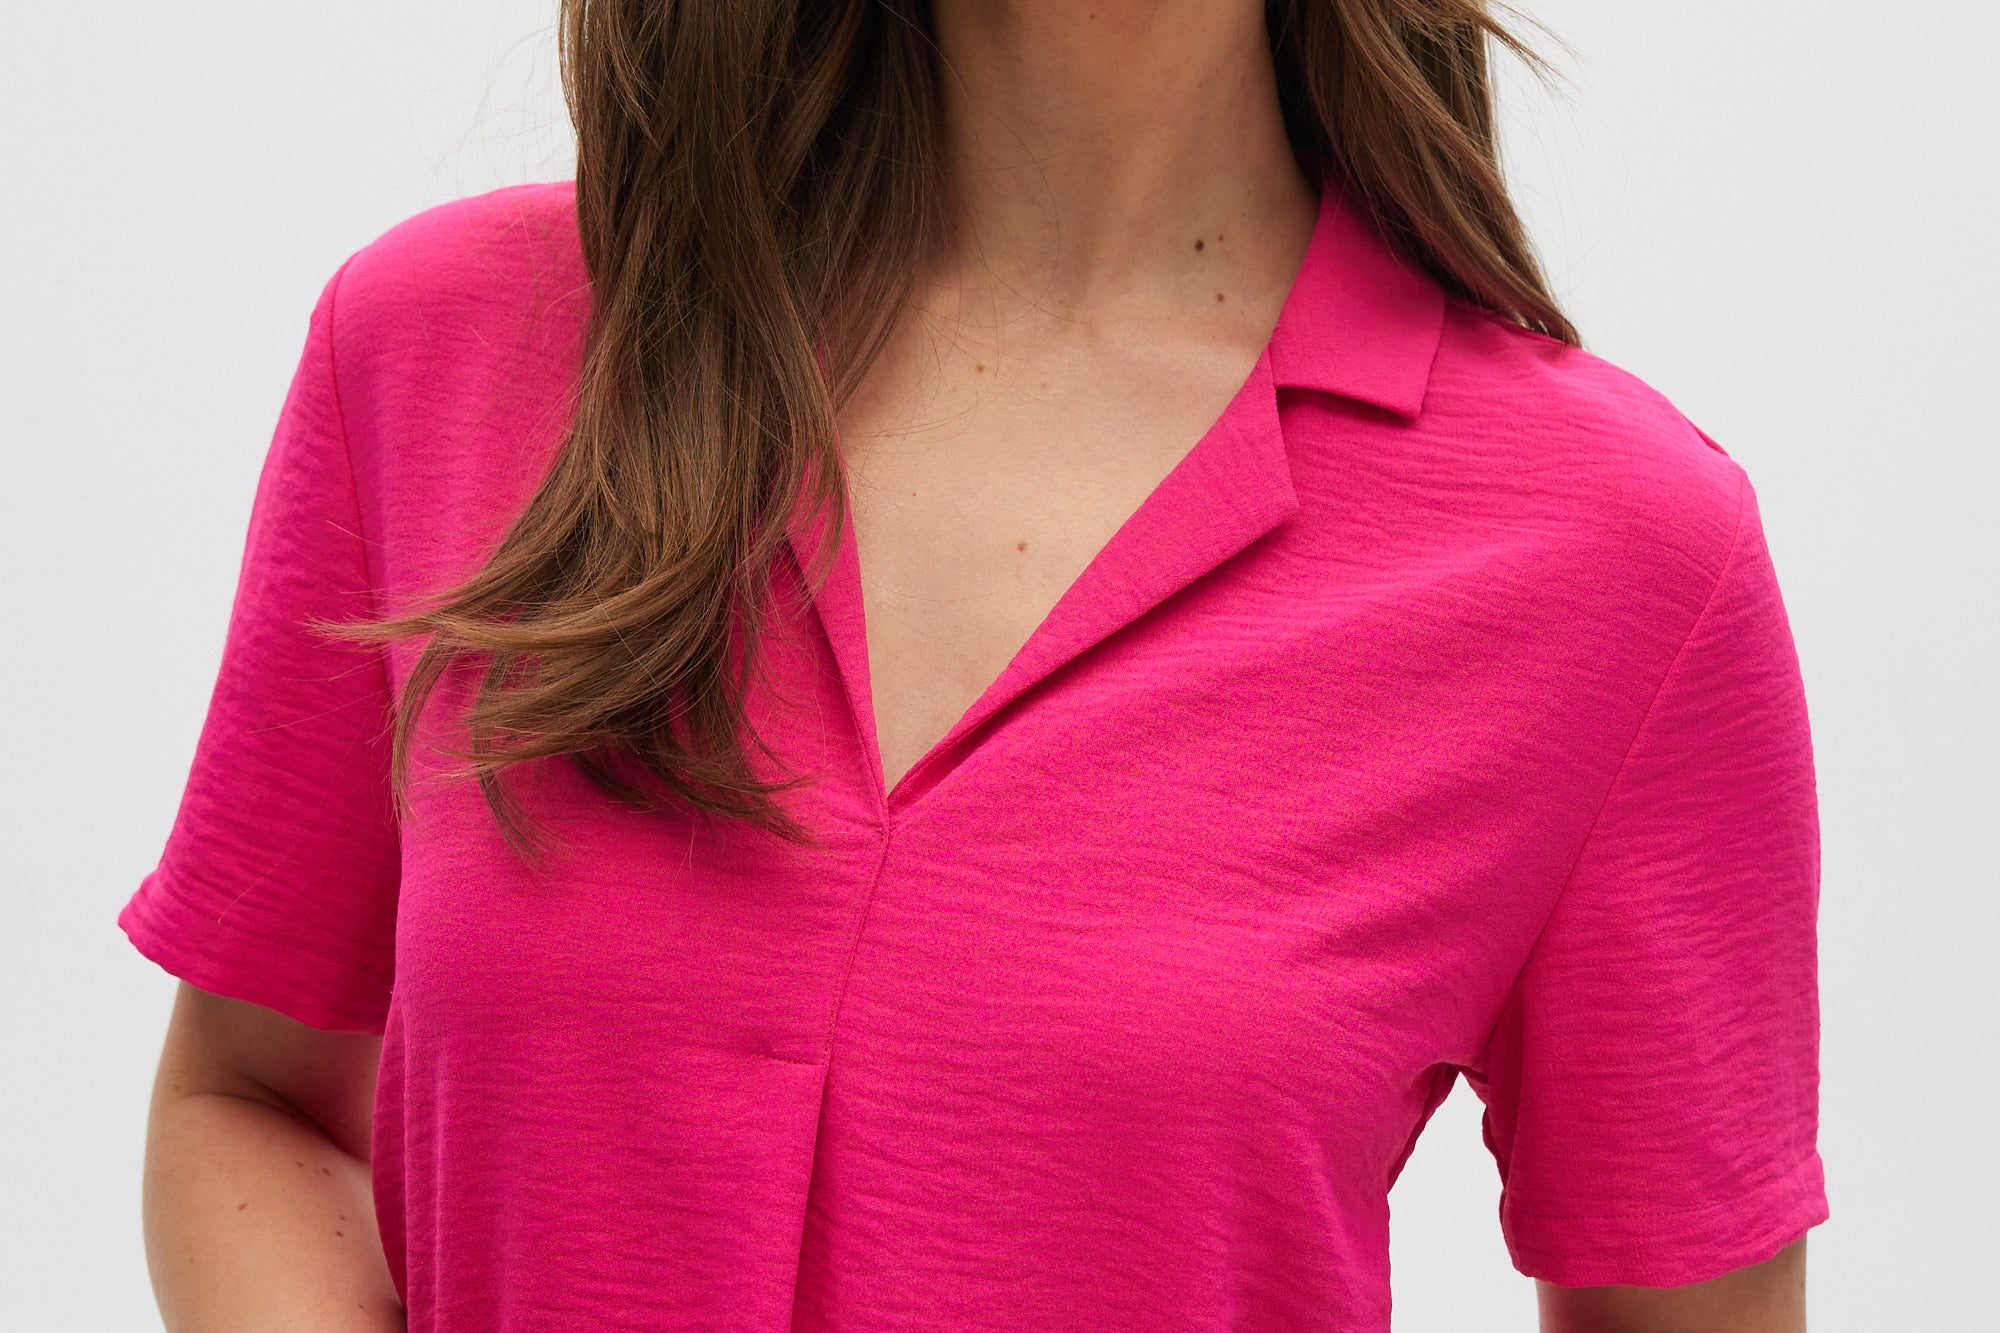 Pink Classic Notch Airflow Shirt close up